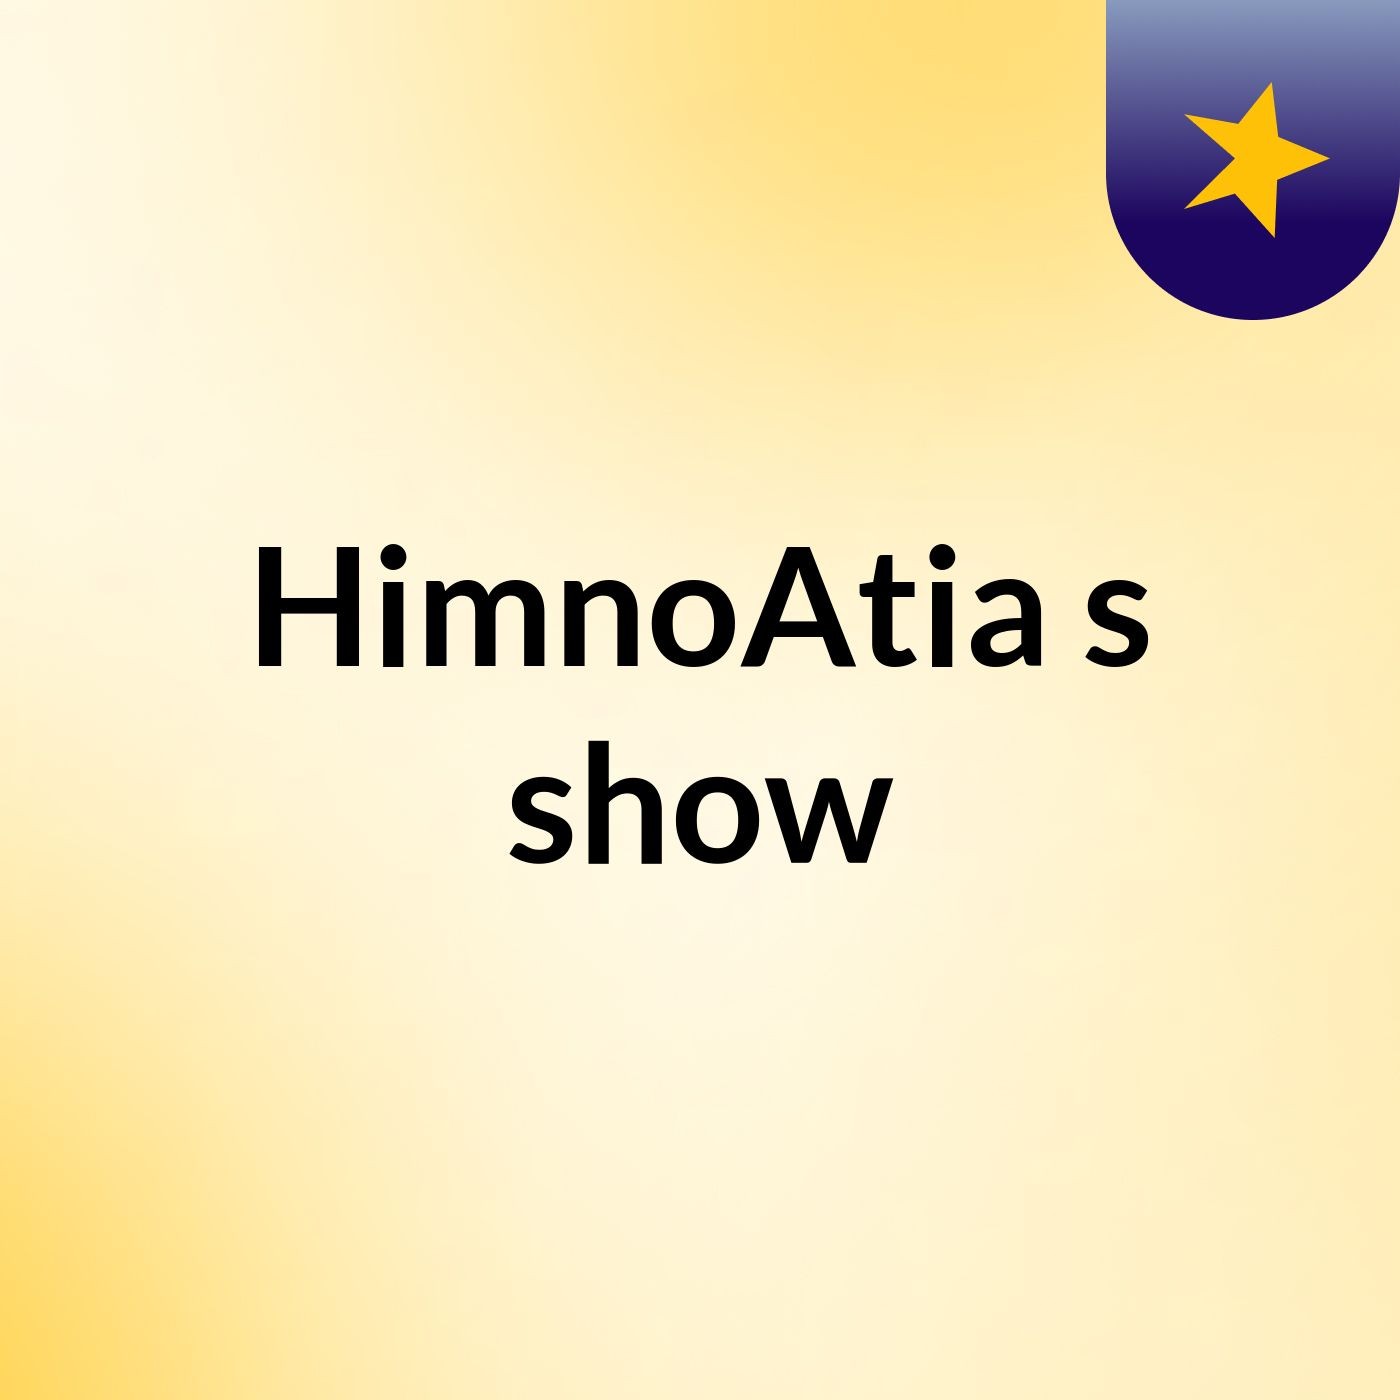 HimnoAtia's show